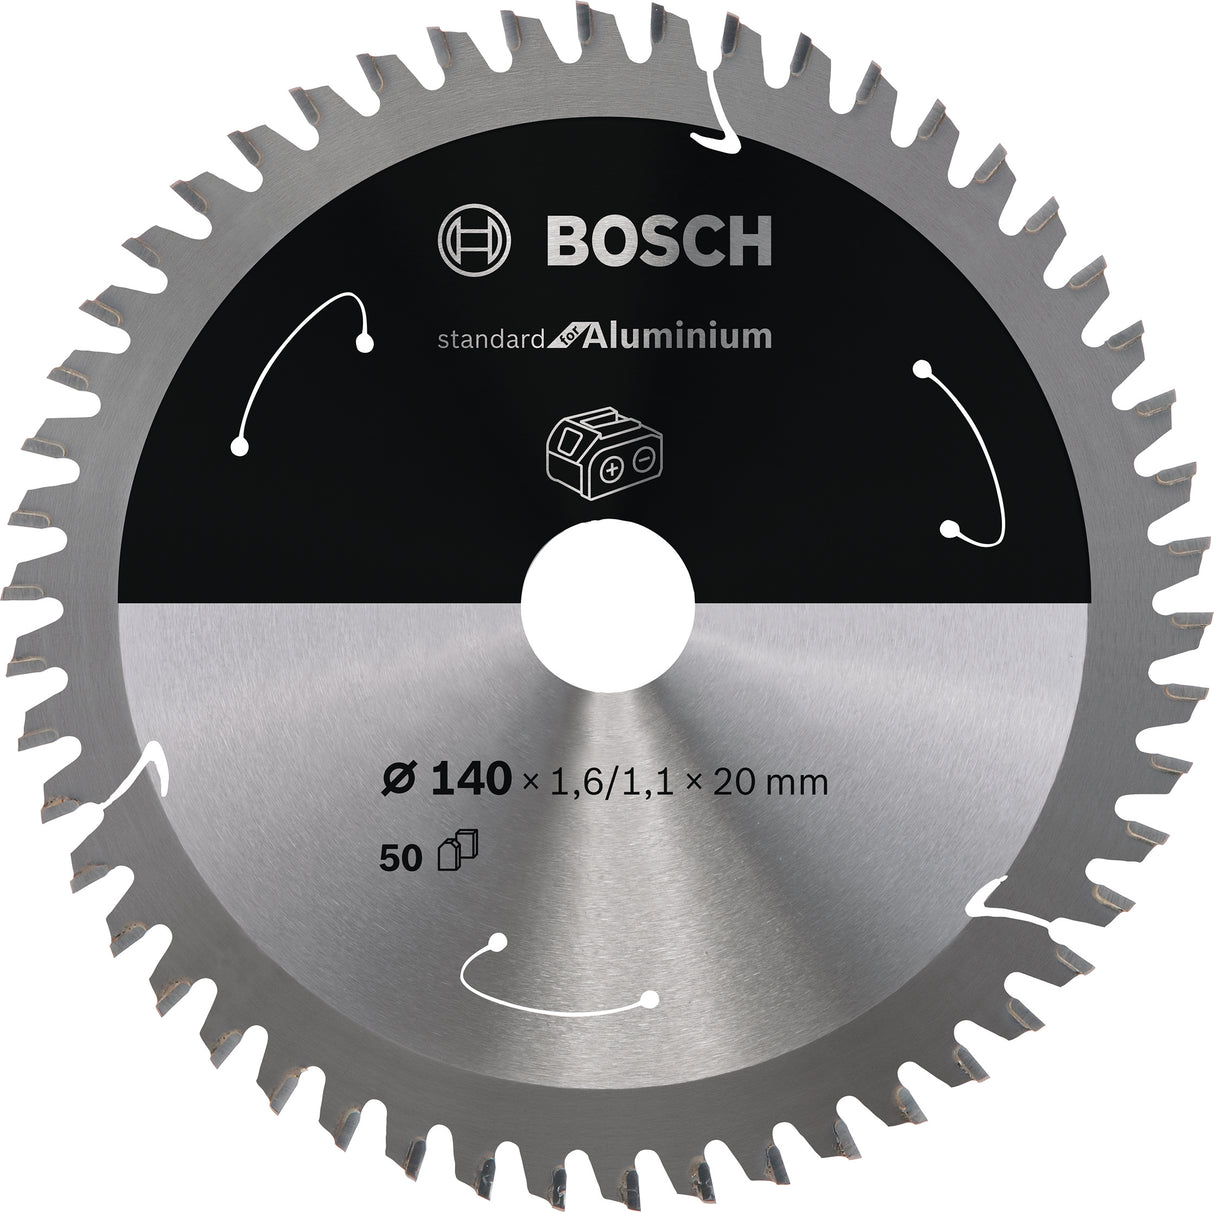 Bosch Professional Aluminium Circular Saw Blade for Cordless Saws - 140x1.6/1.1x20 T50 Standard